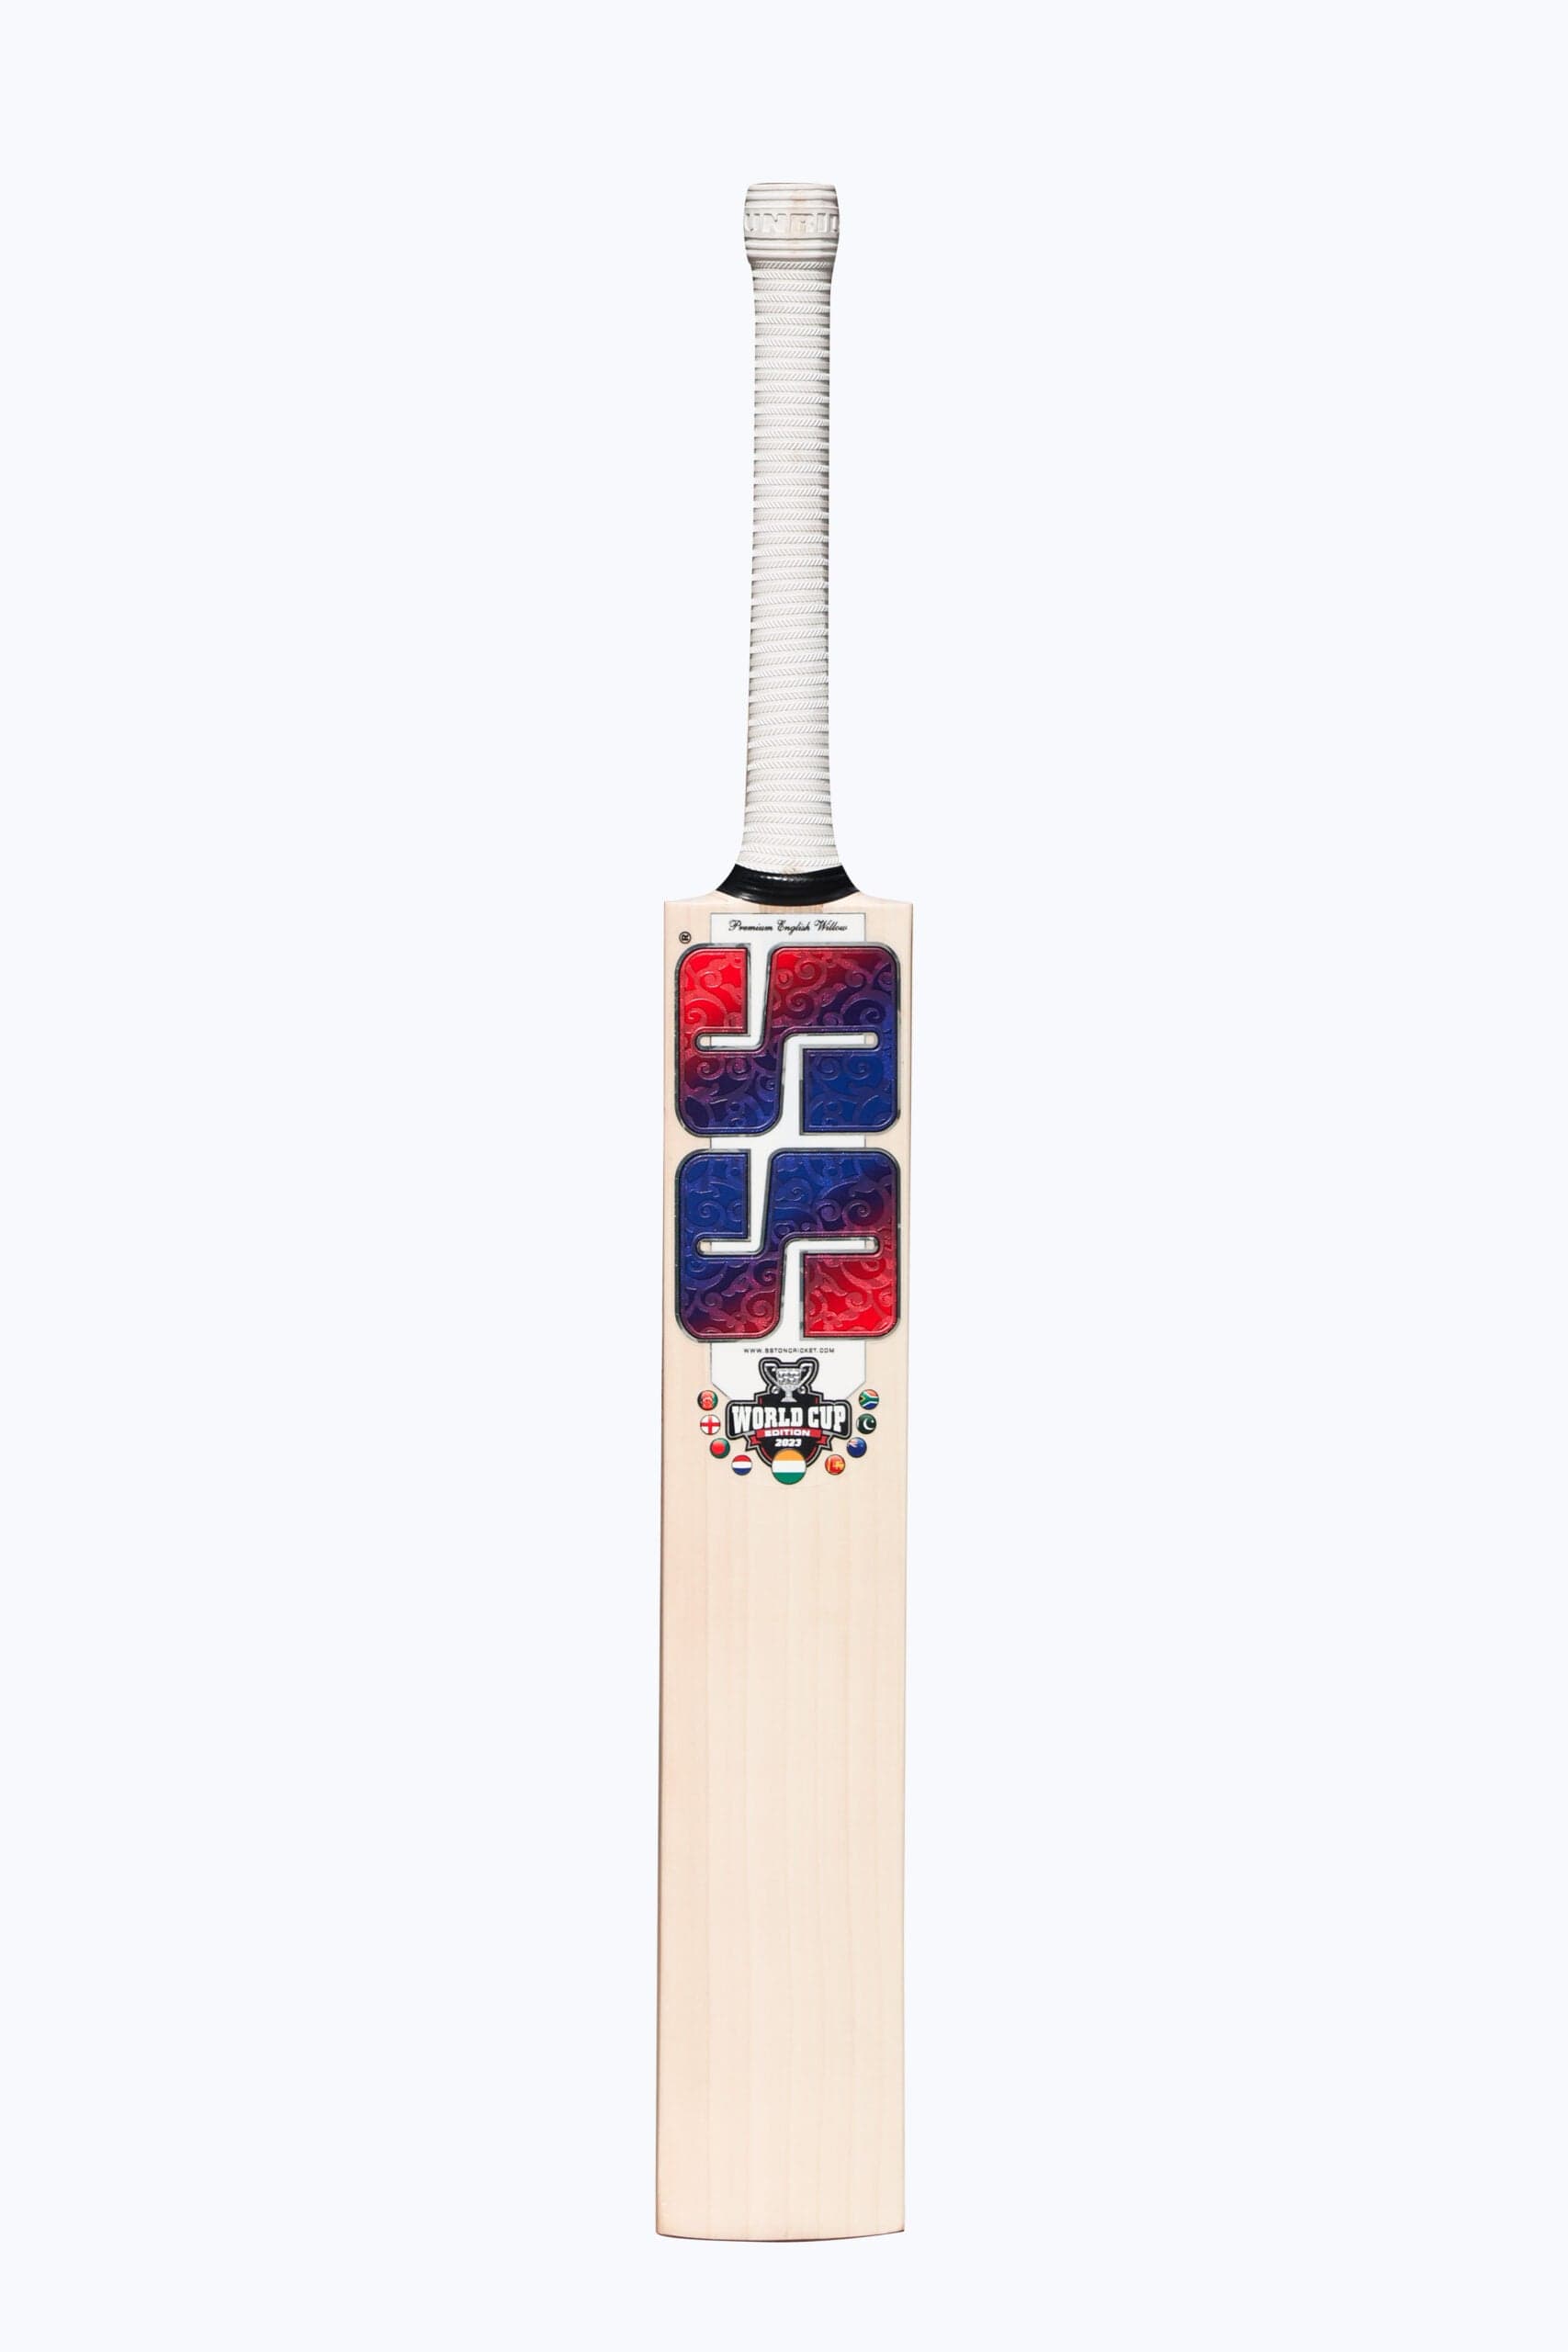 SS Cricket Bats Short Handle / 2'8 SS World Cup Red Adult Cricket Bat